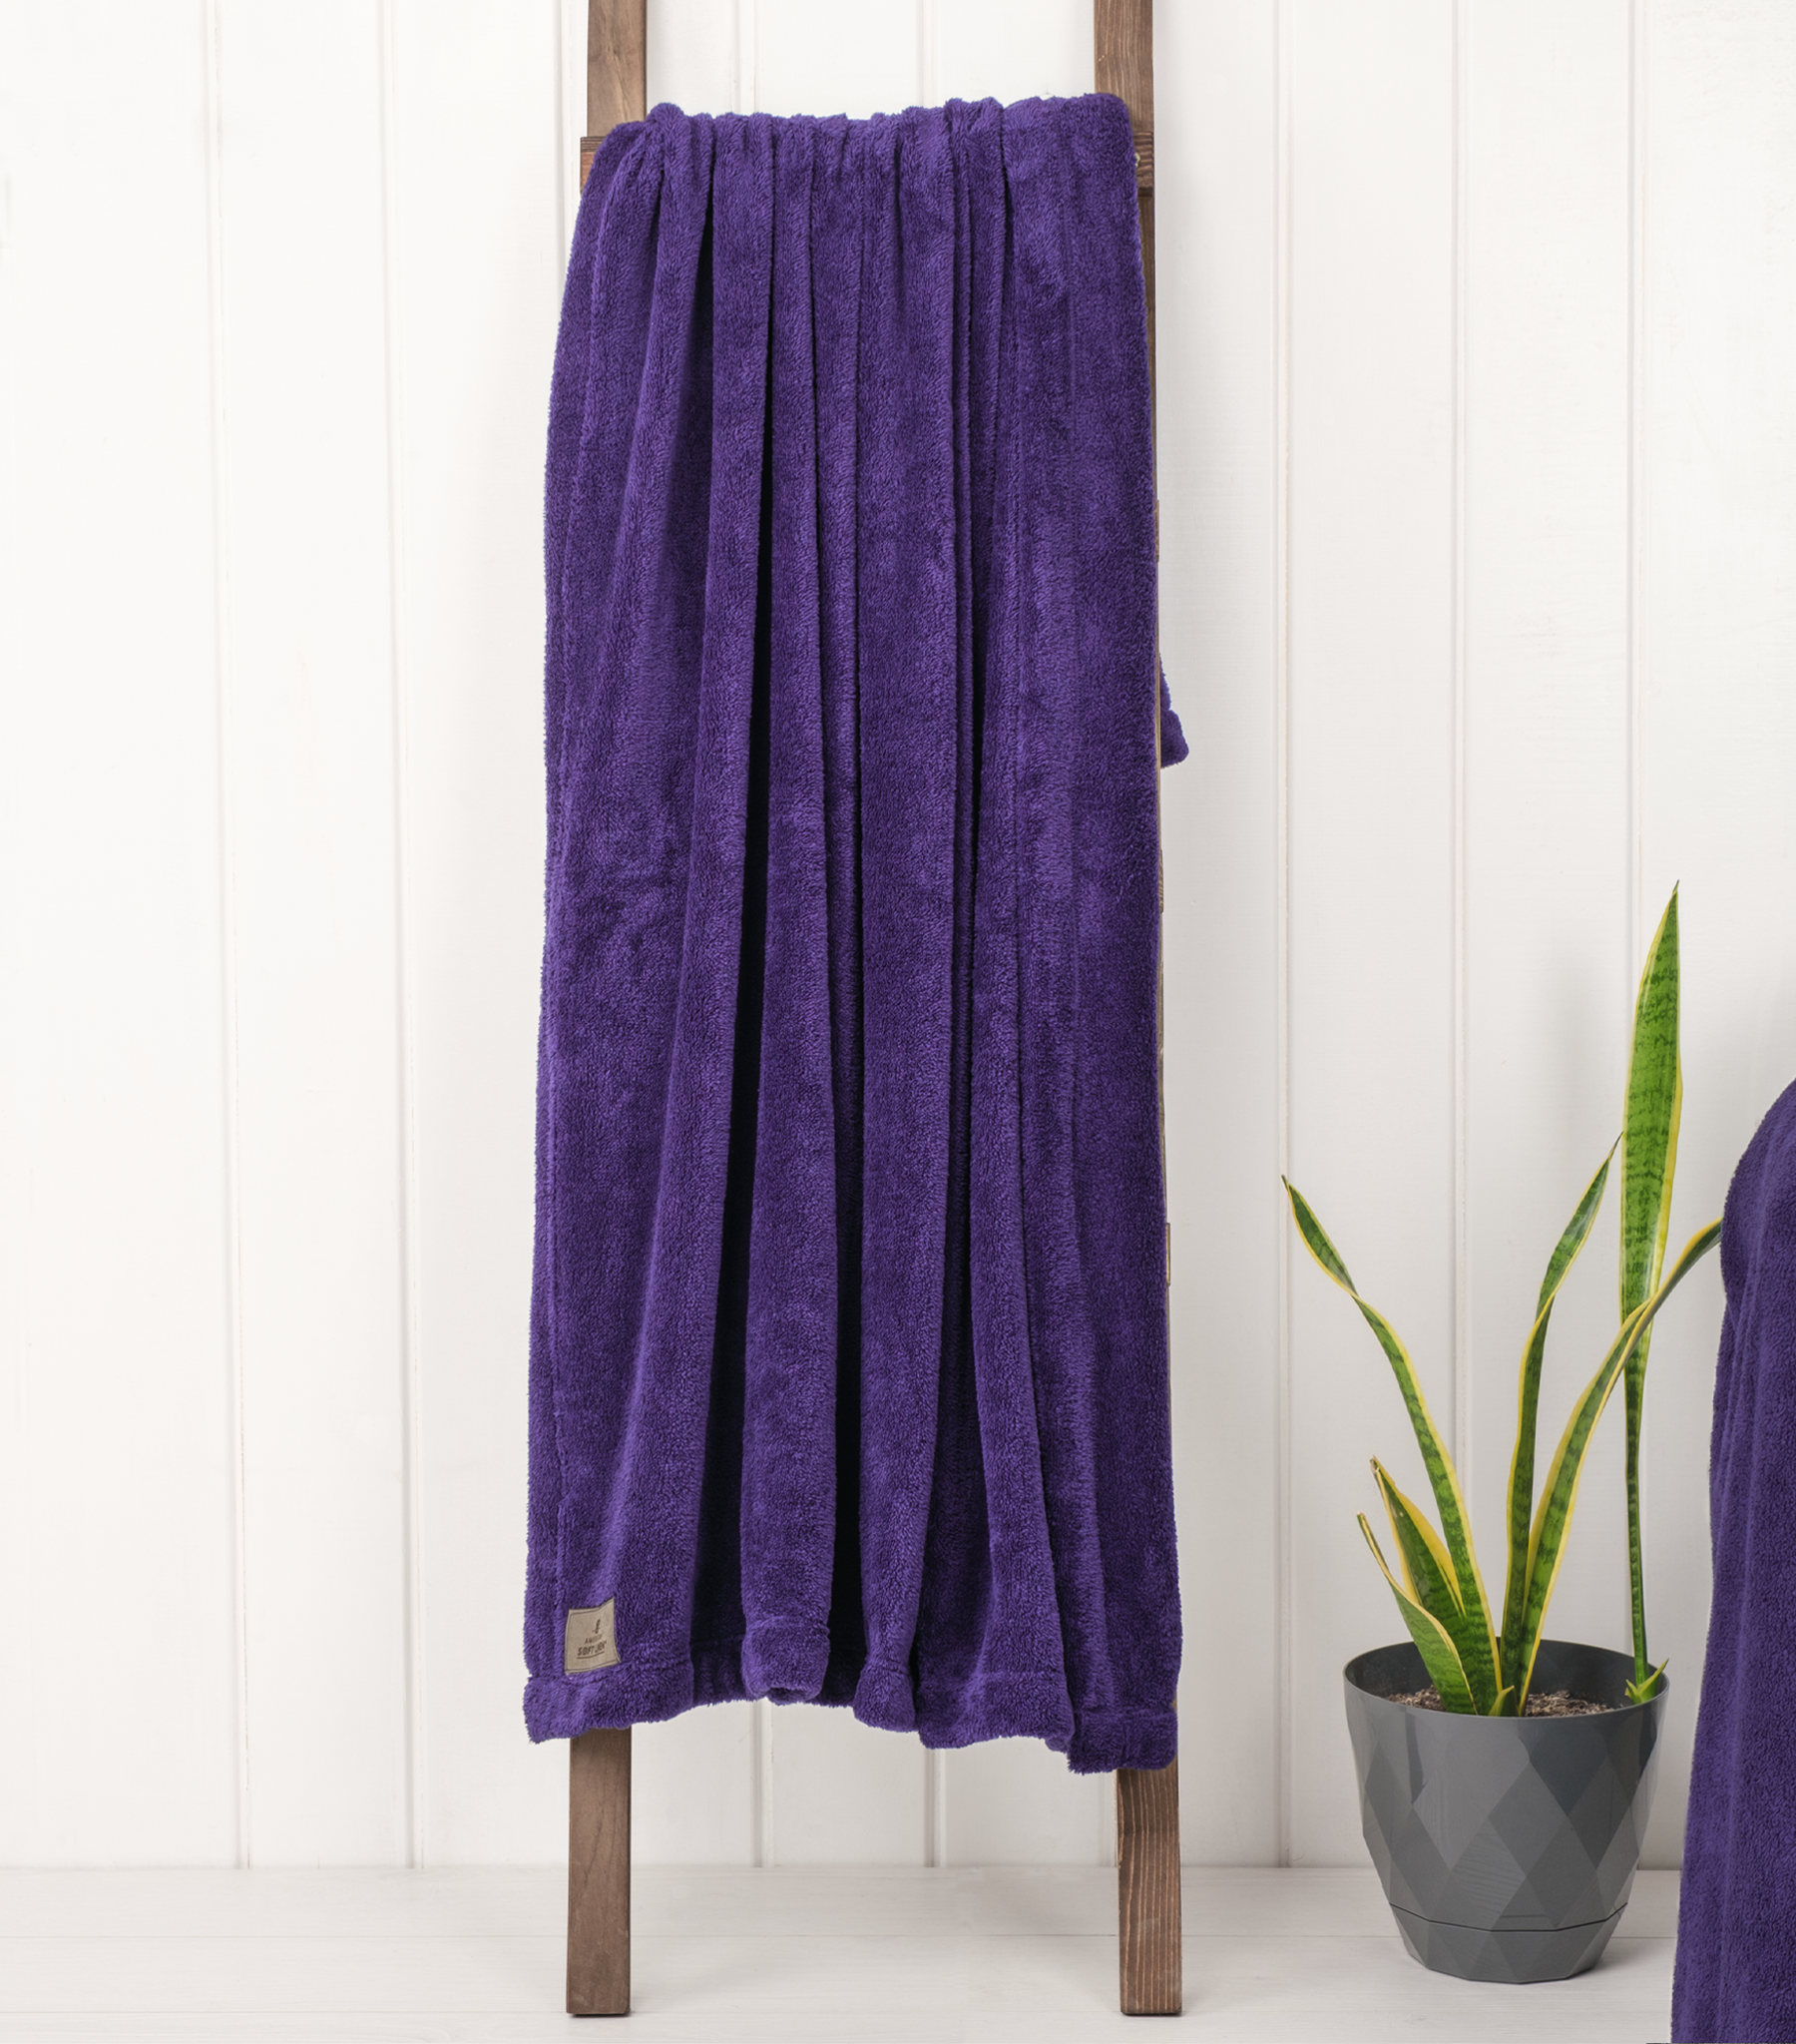 American Soft Linen - Bedding Fleece Blanket - Wholesale - 24 Set Case Pack - Throw Size 50x60 inches - Purple - 2